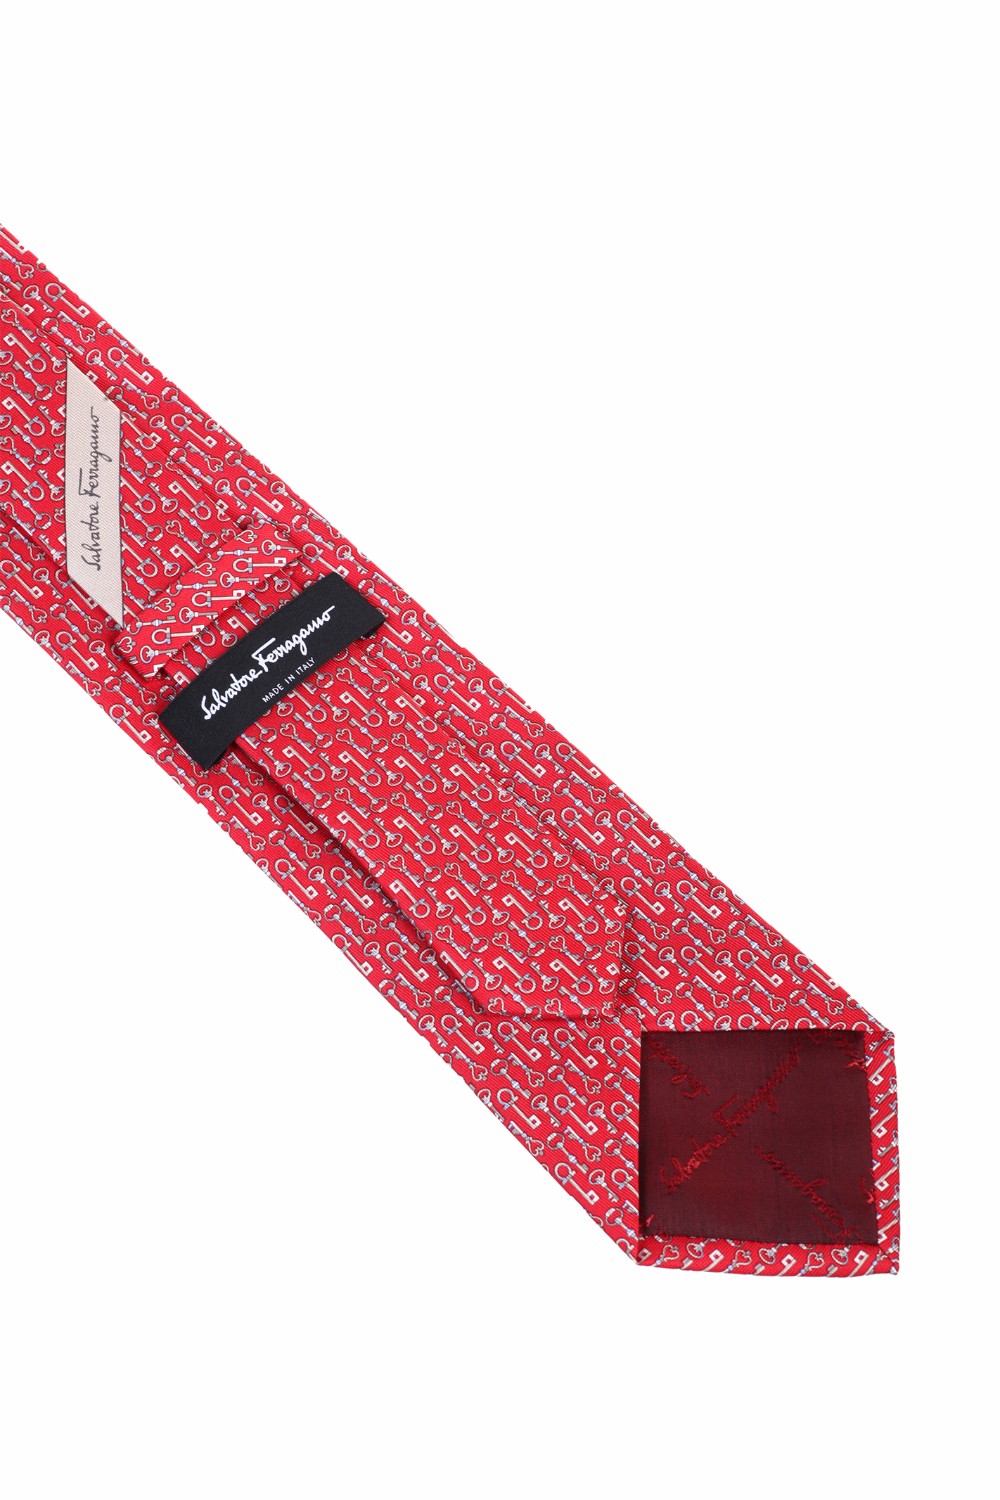 shop SALVATORE FERRAGAMO  Cravatta: Salvatore Ferragamo cravatta in seta stampa Chiavi.
Composizione: 100% seta.
Made in Italy.. 350292-R number 9050983